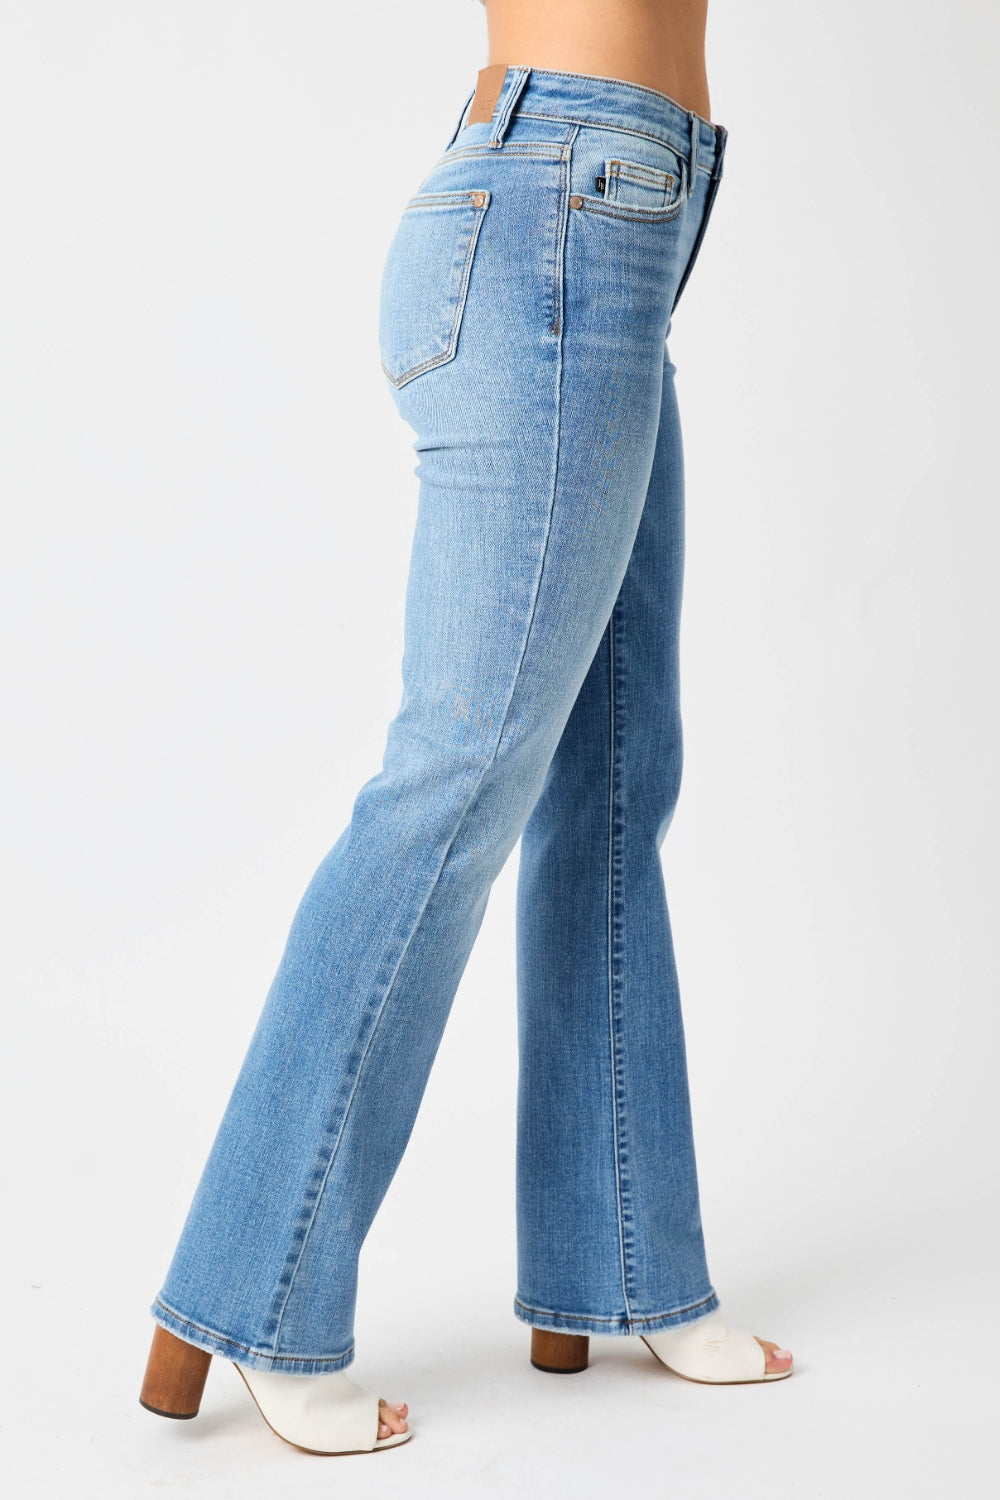 Judy Blue Full Size High Waist Straight Jeans Bottom wear